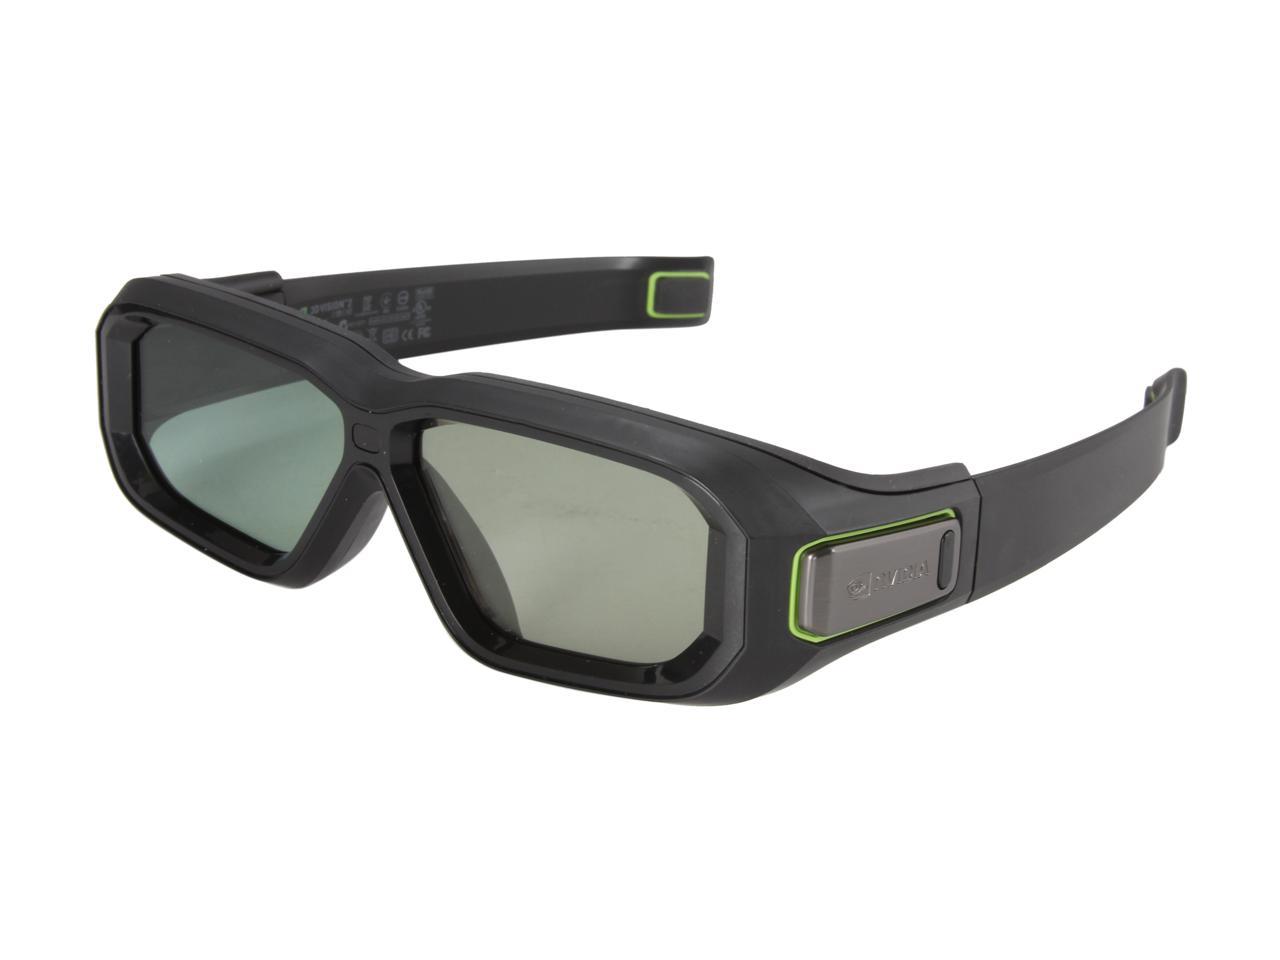 PC Glasses Shutter Type 3D Glasses Compatible for NVIDIA Ningda VISION2 Generation 3 Generation Stereo Wireless Glasses 3D Glasses 